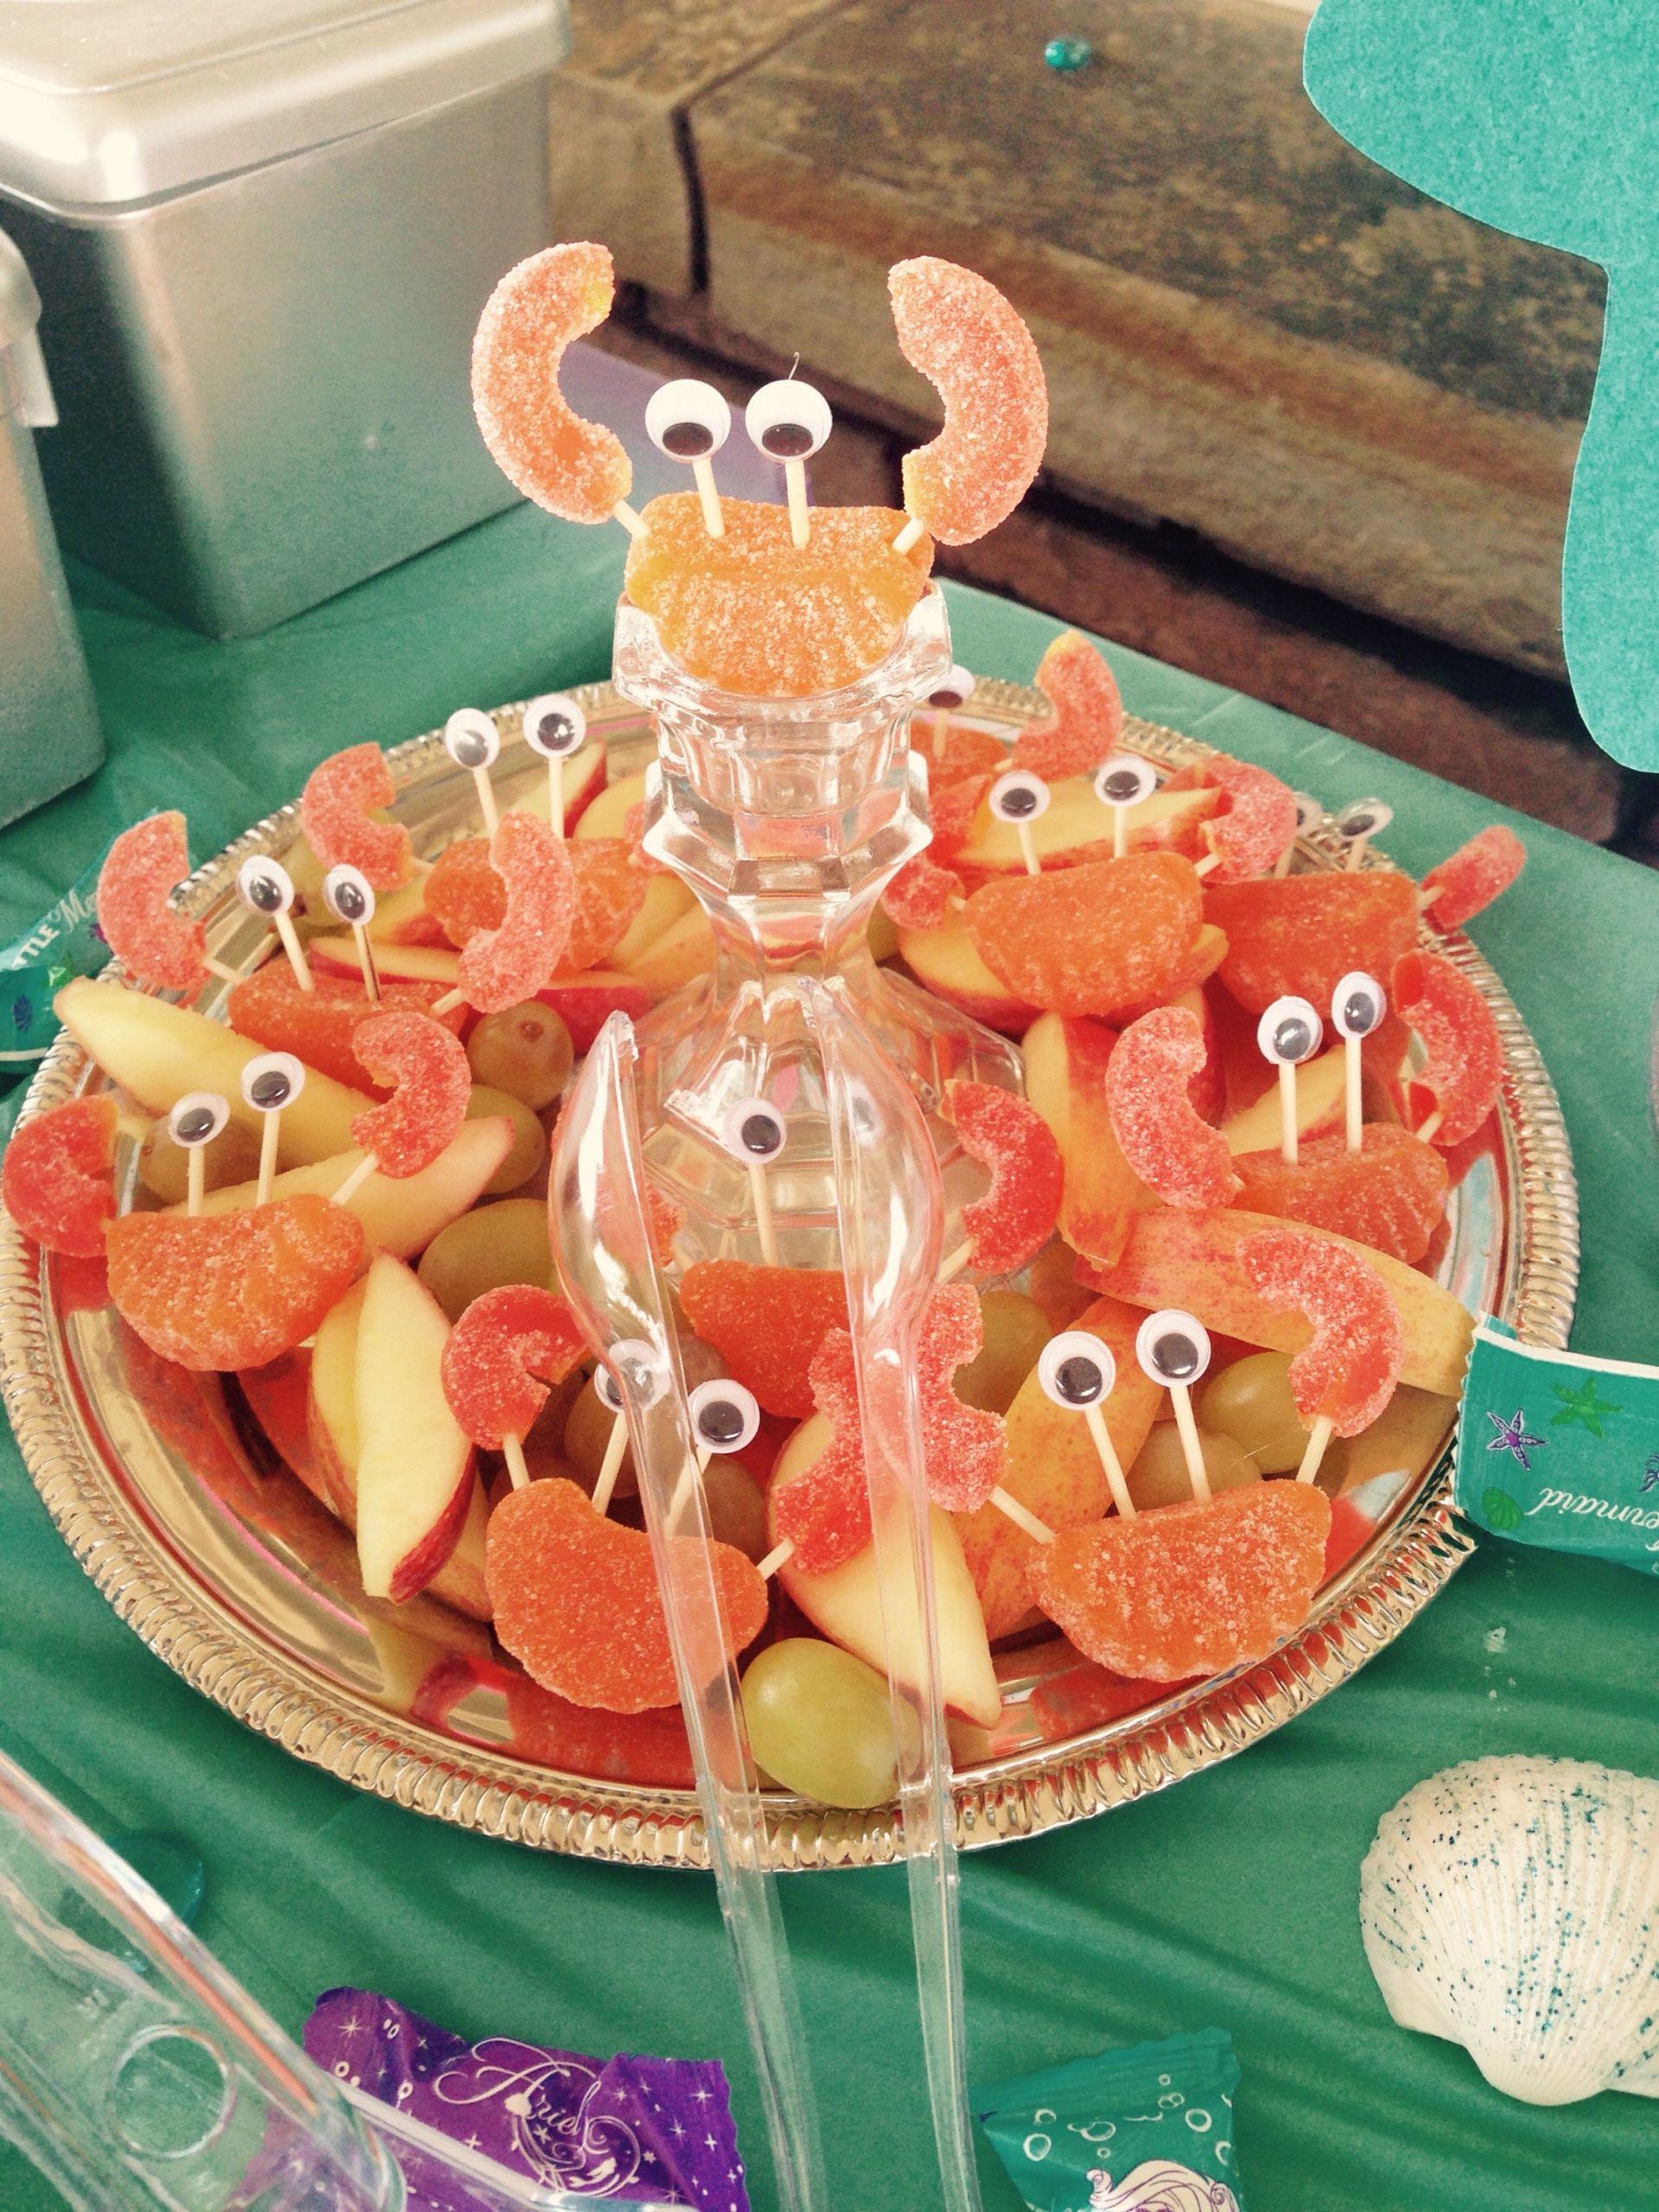 Mermaid Party Food Ideas
 The Little Mermaid themed Birthday Party